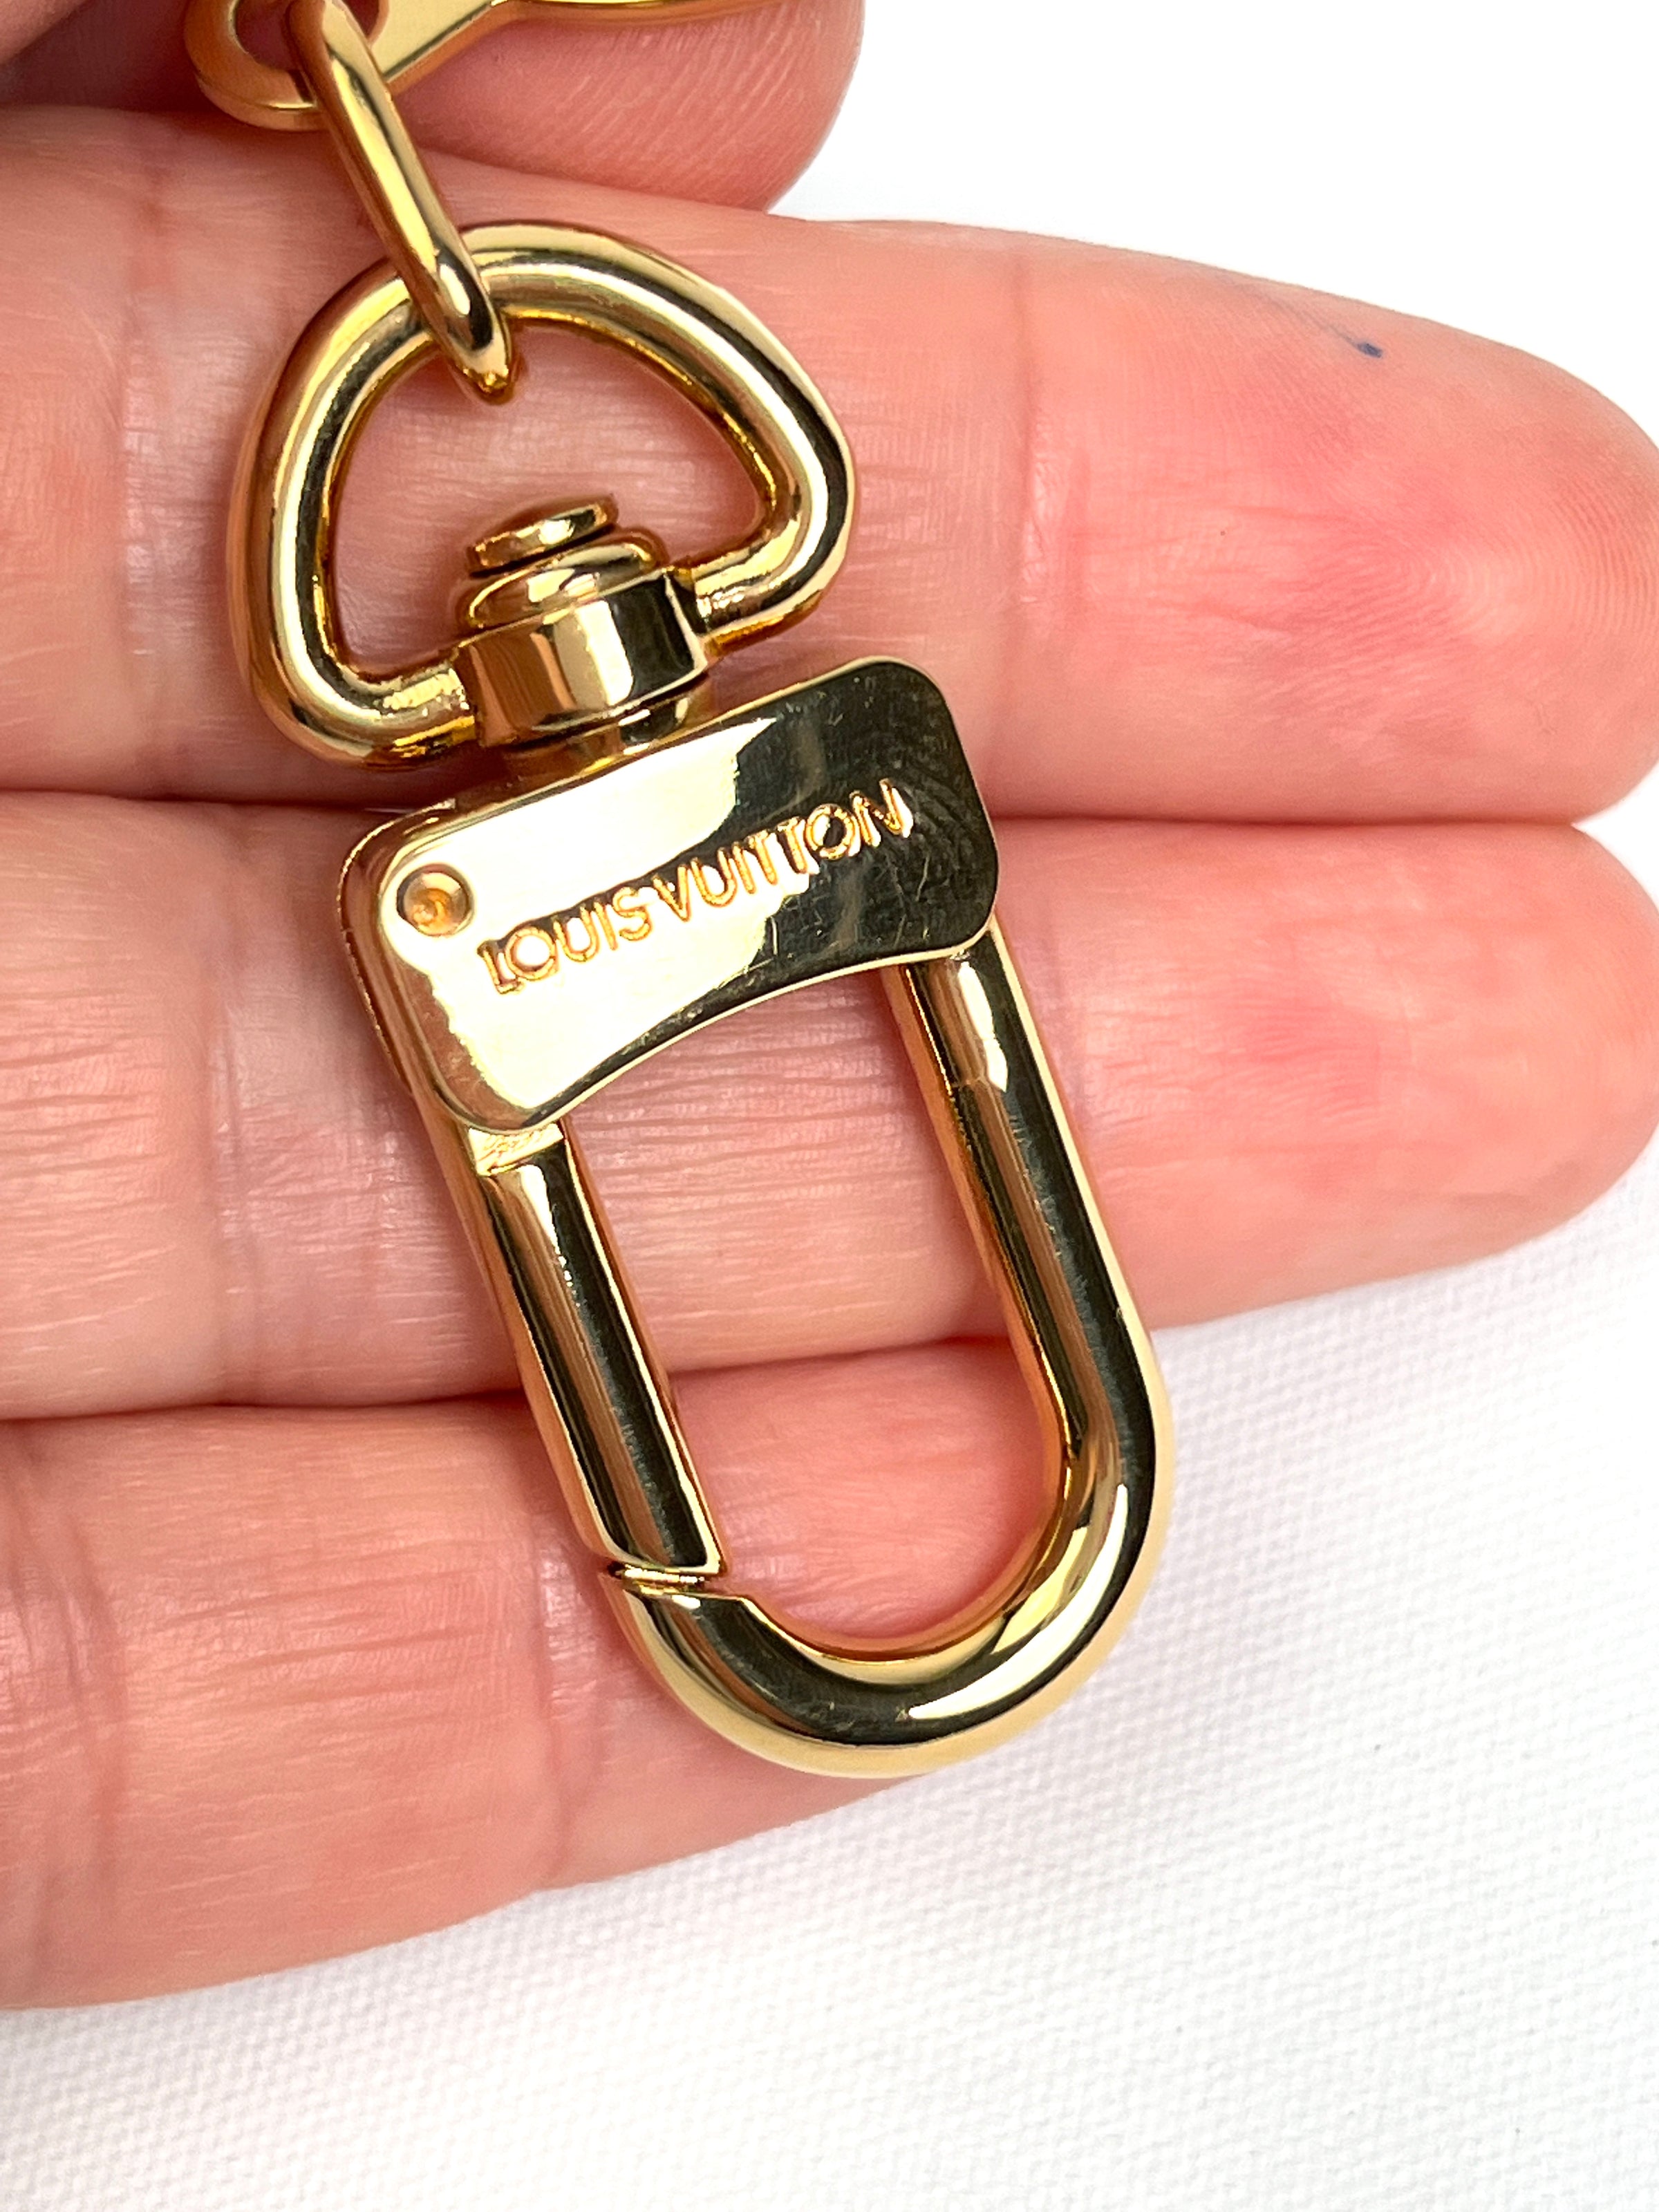 LOUIS VUITTON Key Charm, Key Chain, or Bag Extender.